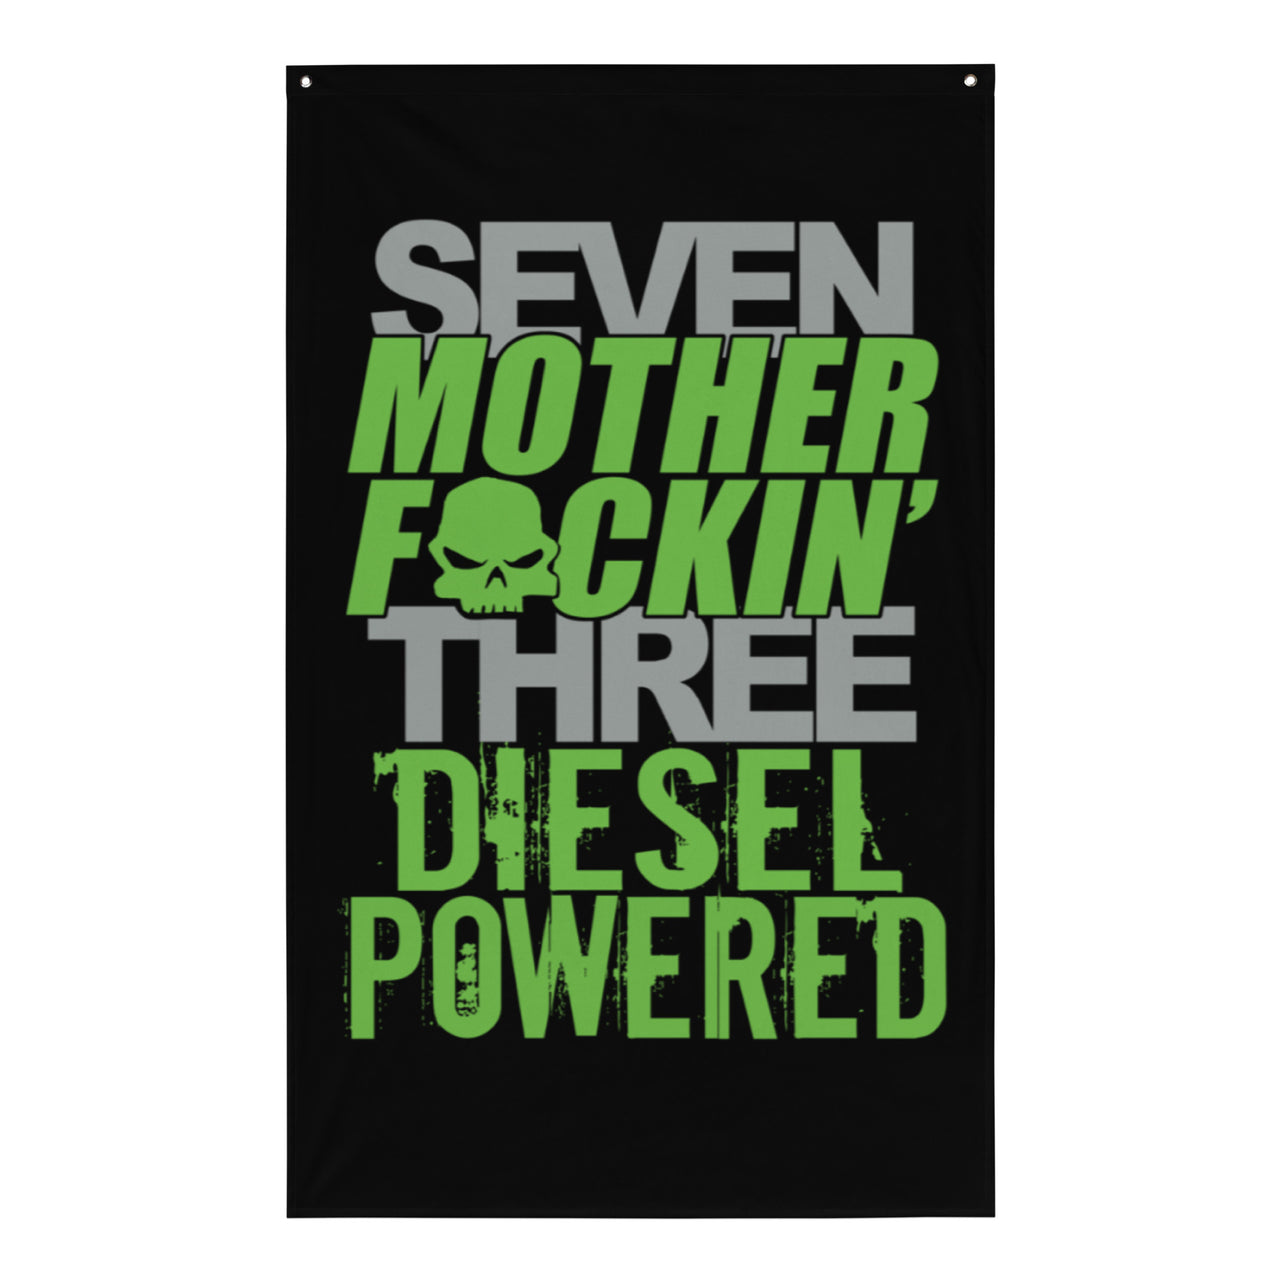 7.3 Power Stroke Diesel Flag